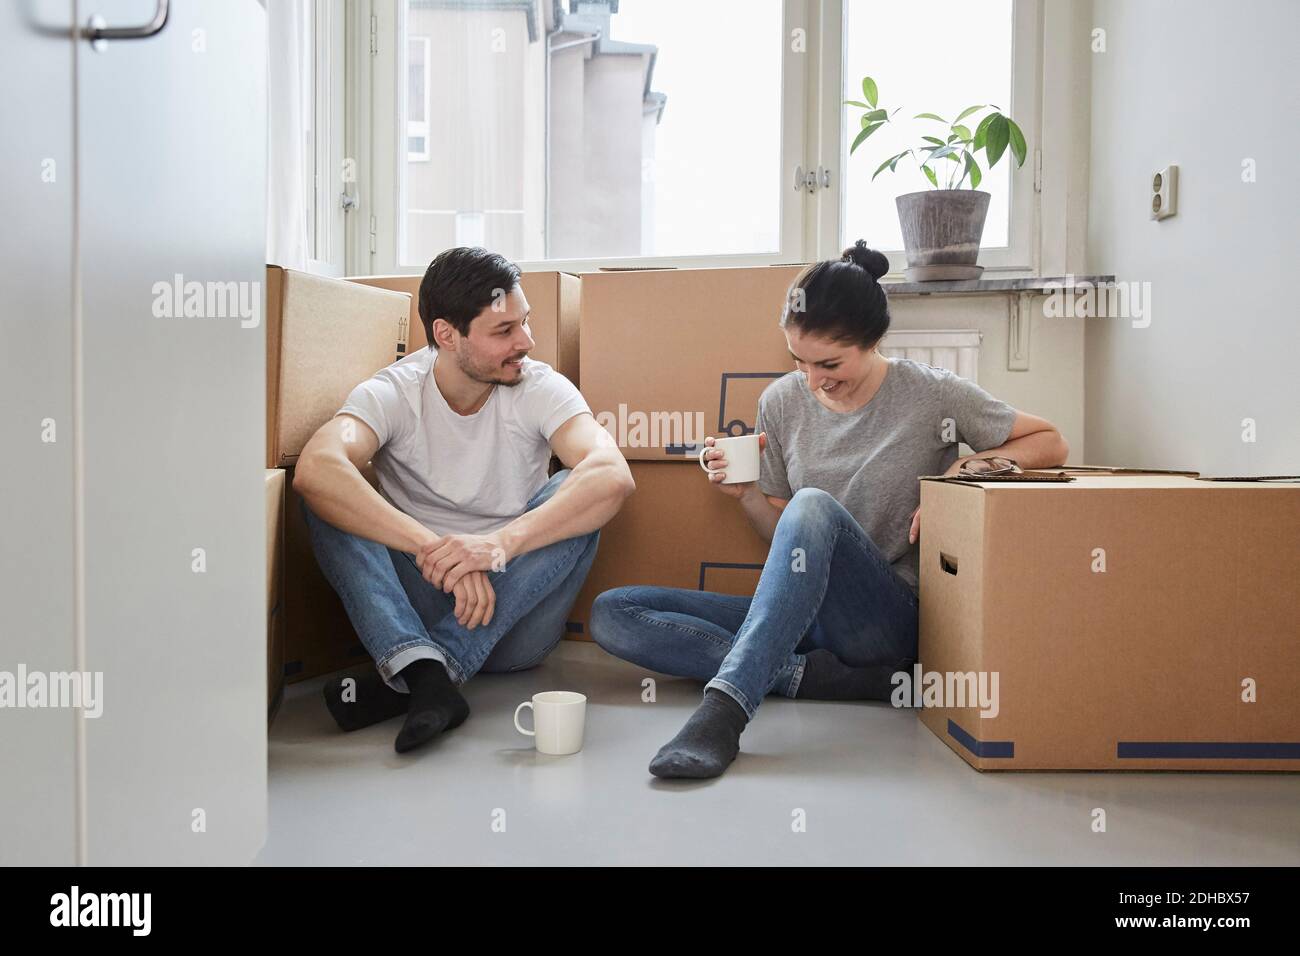 Smiling couple talking while enjoying coffee during moving house Stock Photo